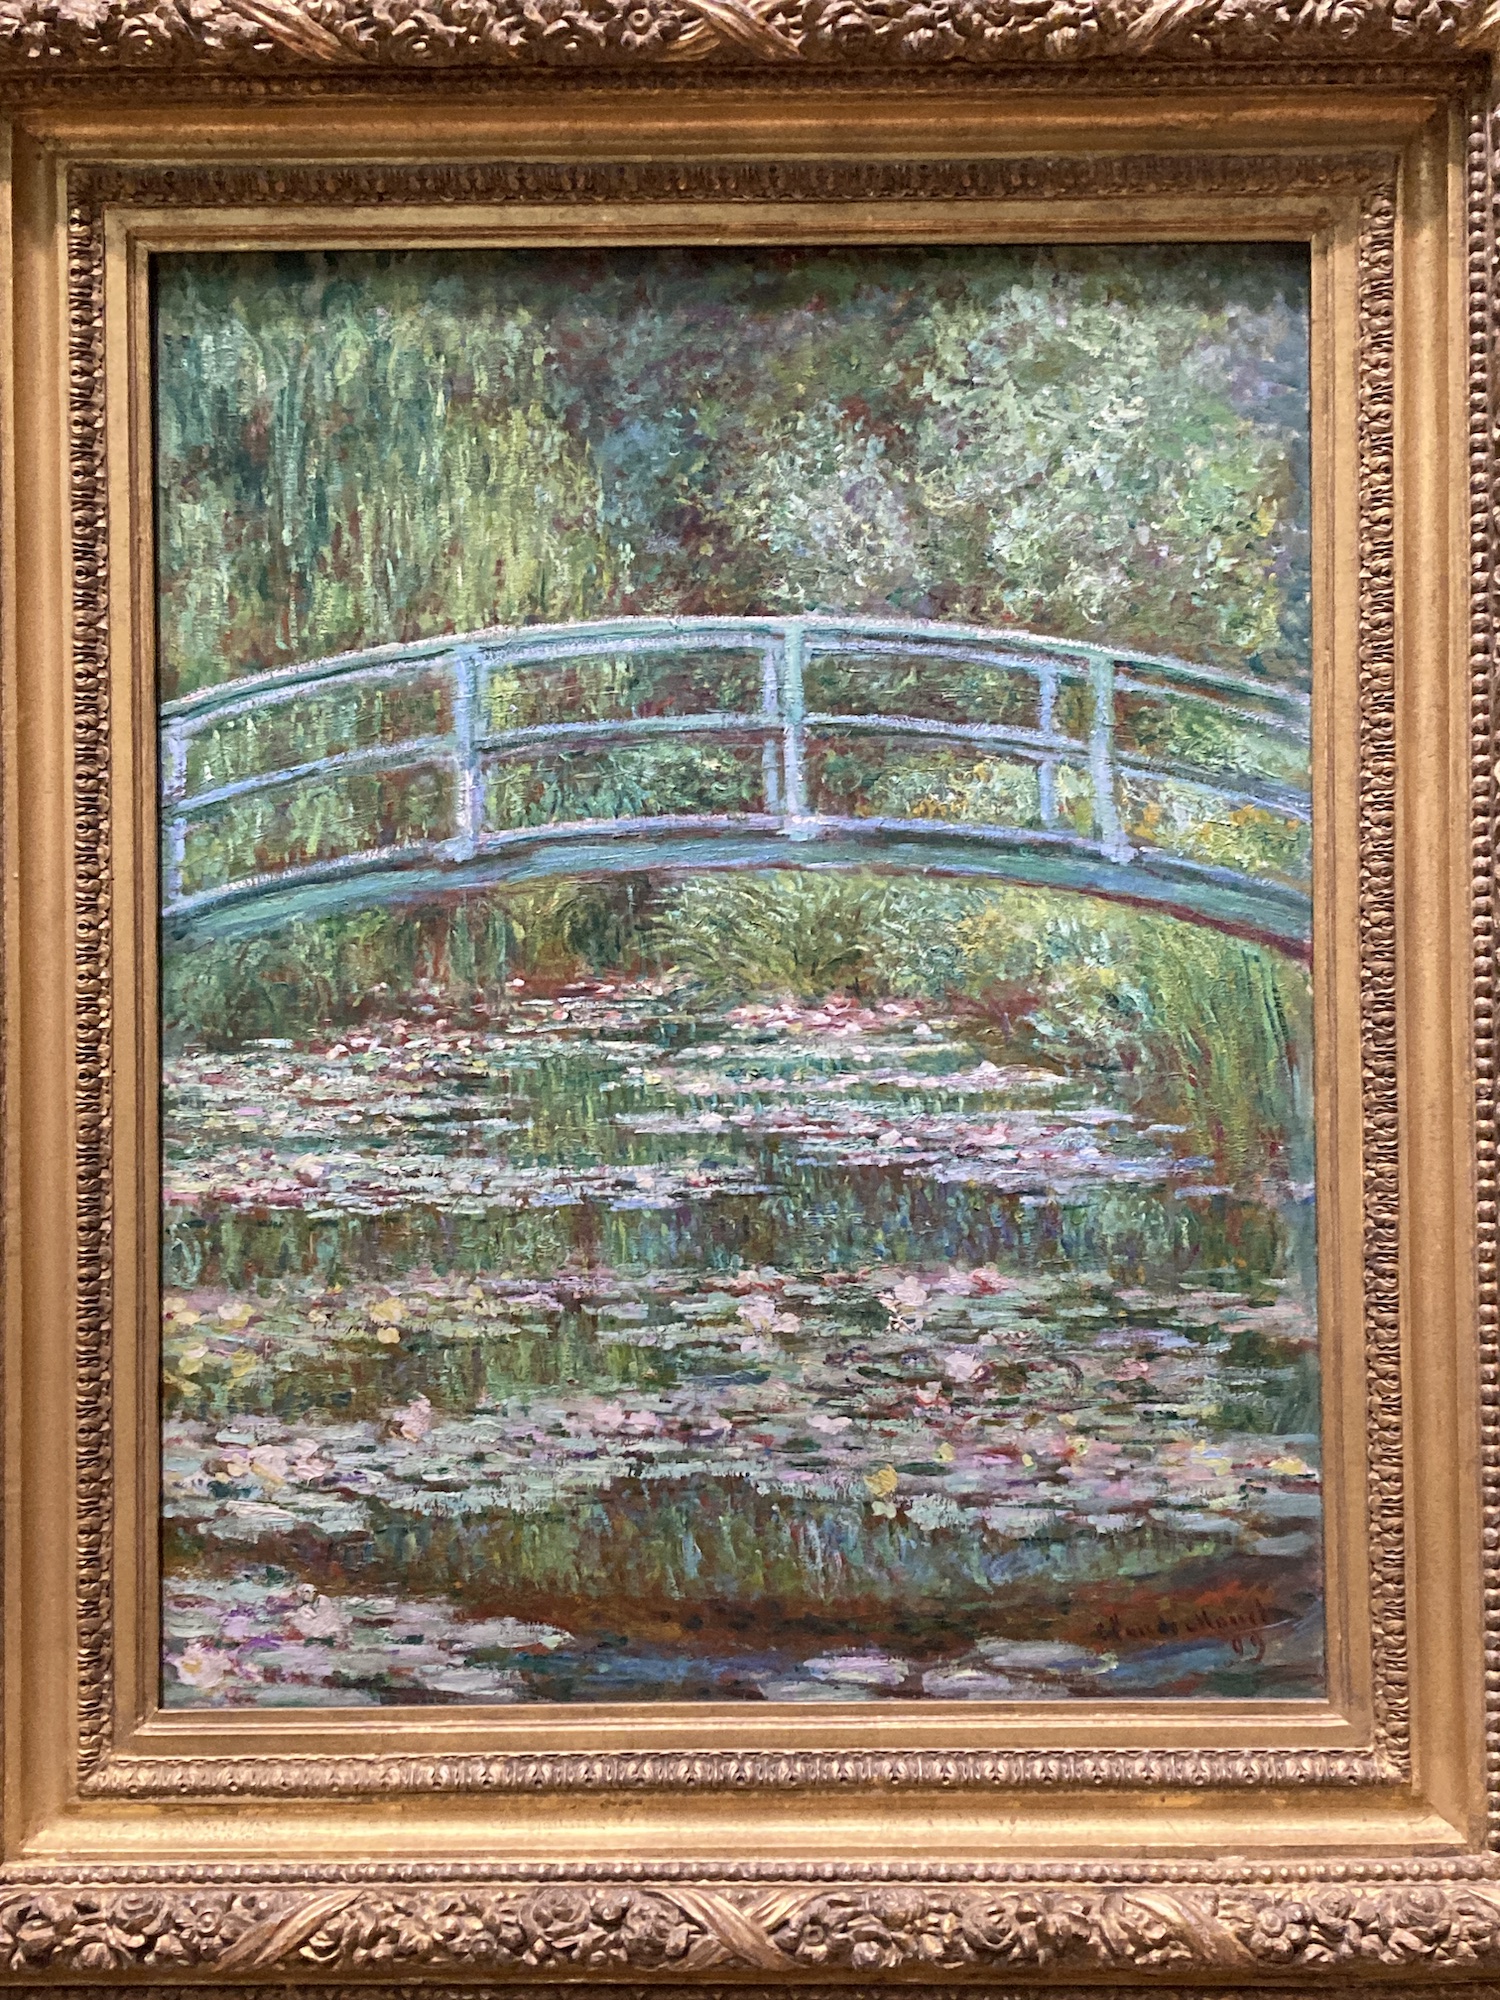 Claude Monet,  Bridge over a Pond of Water Lilies 1899, Metropolitan Museum of Art, New York, New York